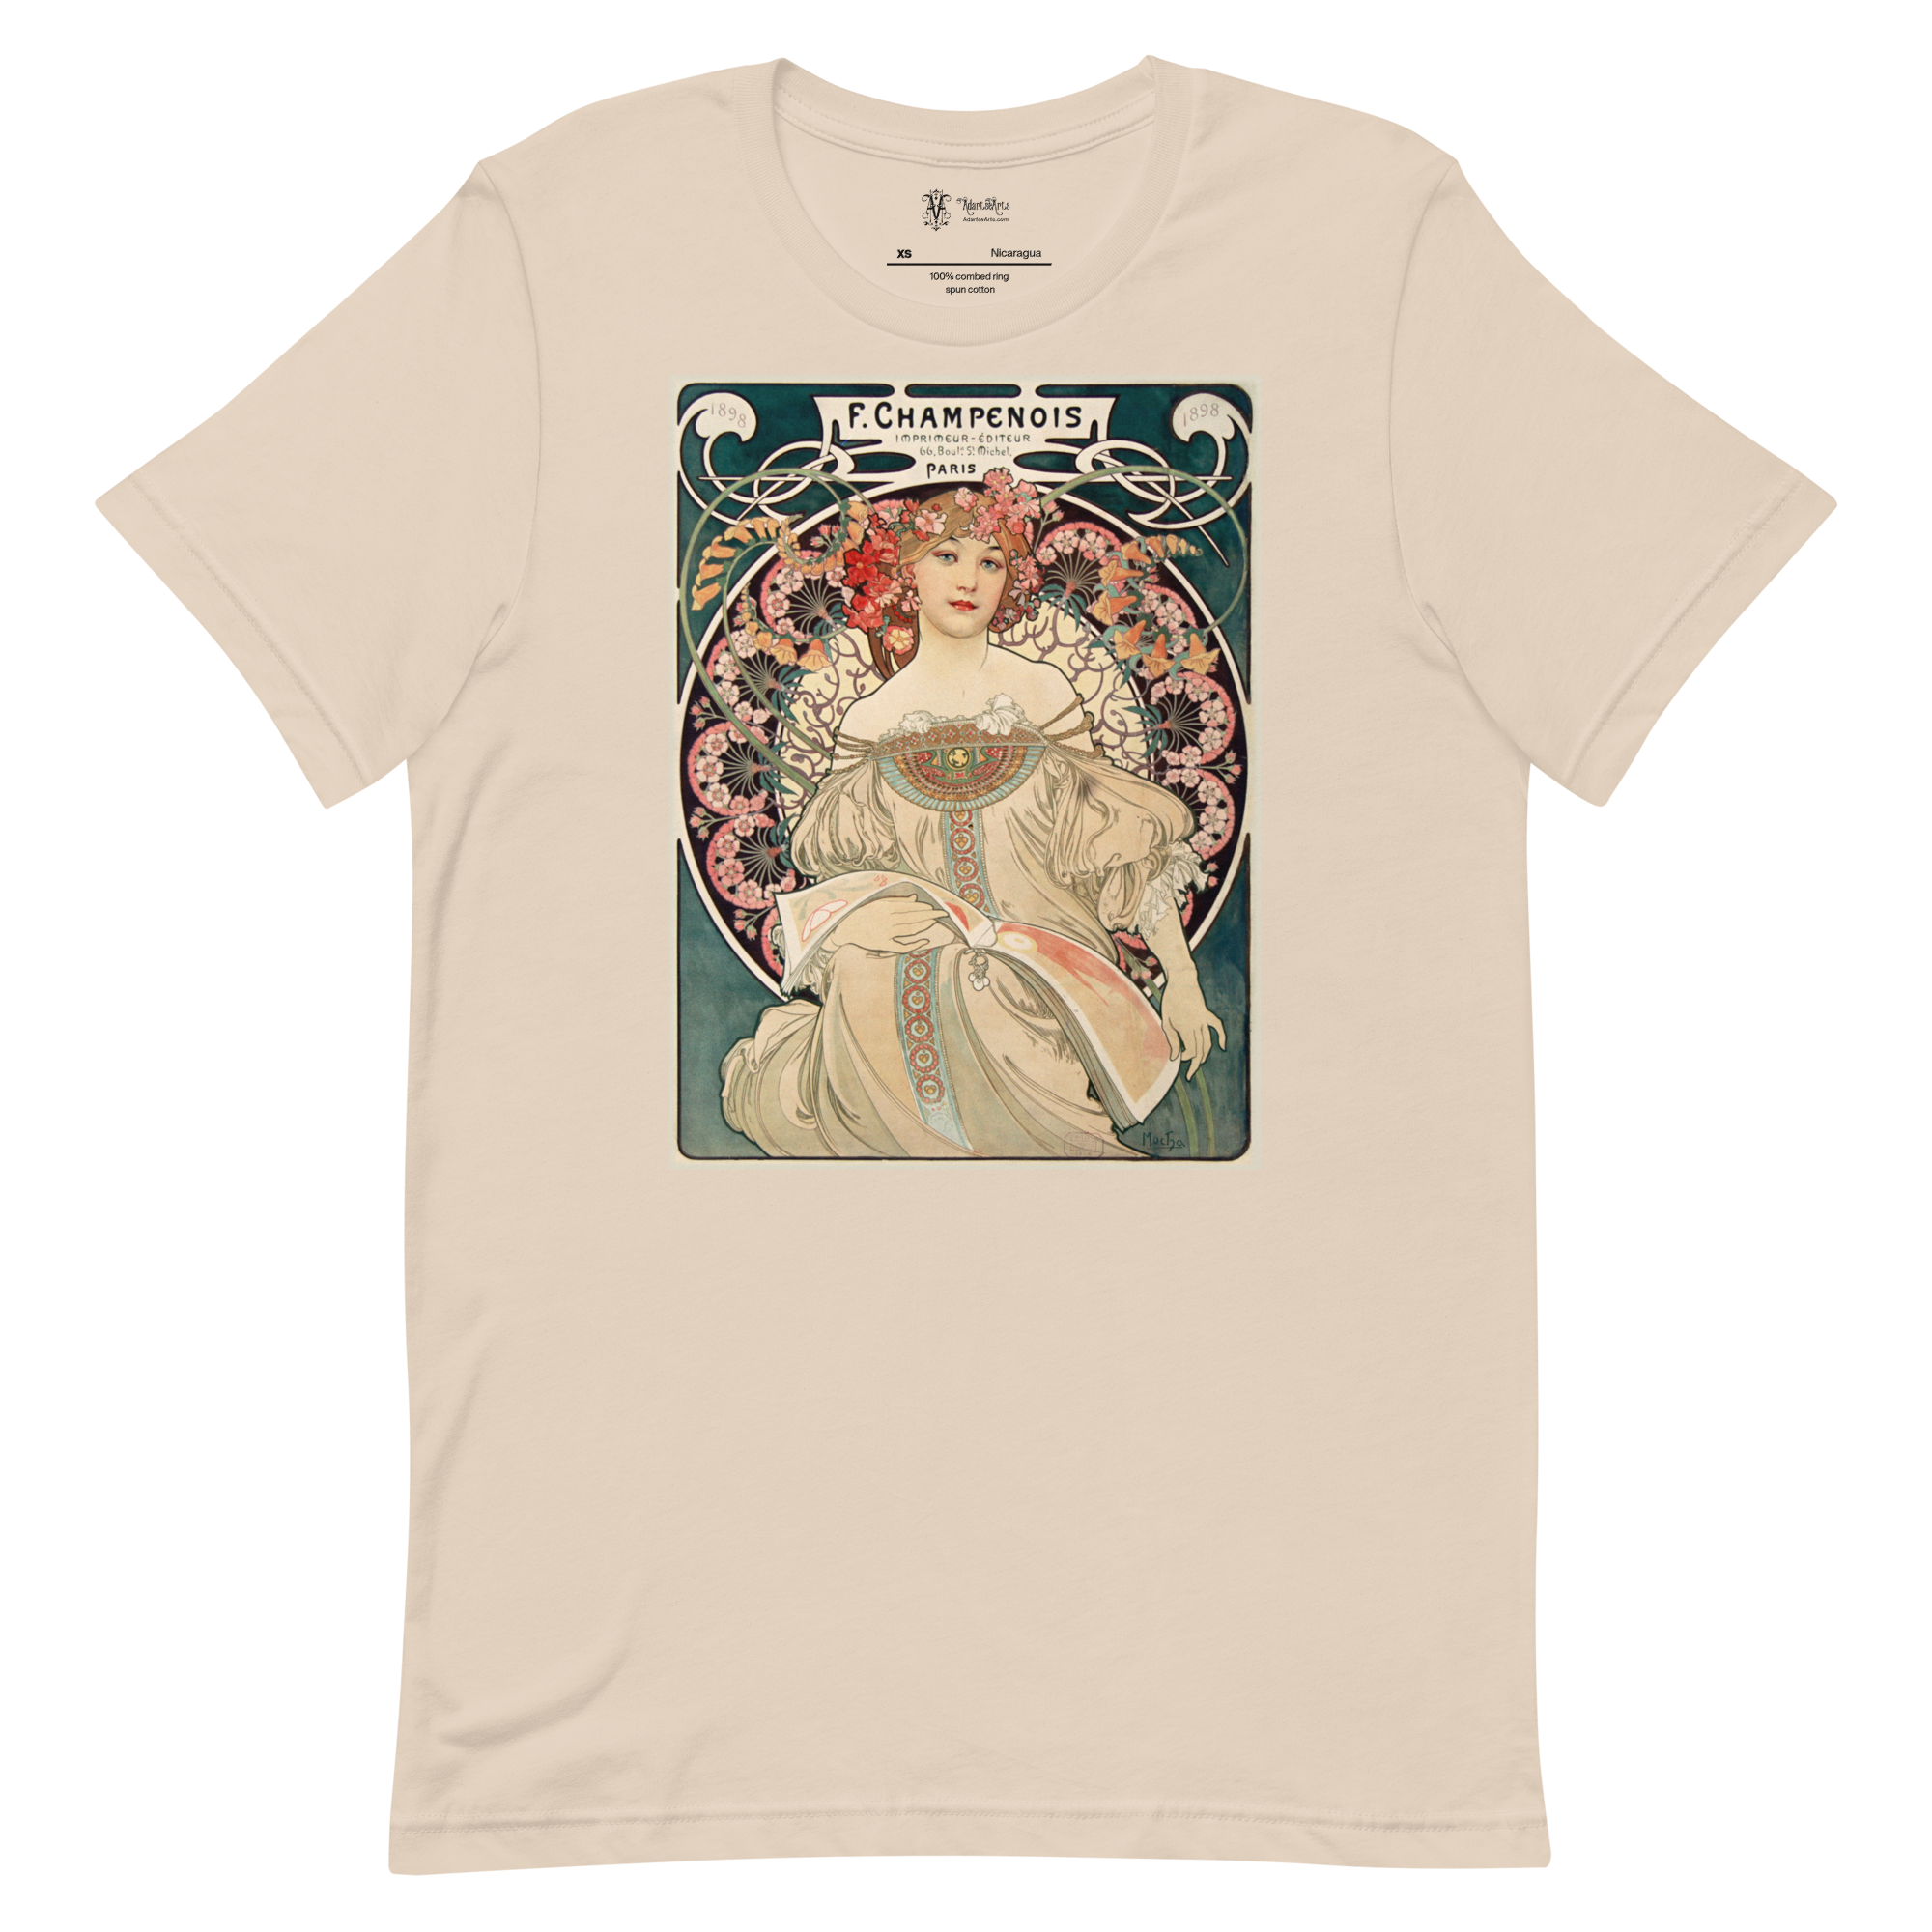 Premium Unisex Art T-Shirt of F. Champenois (1898) by Alphonse Mucha.